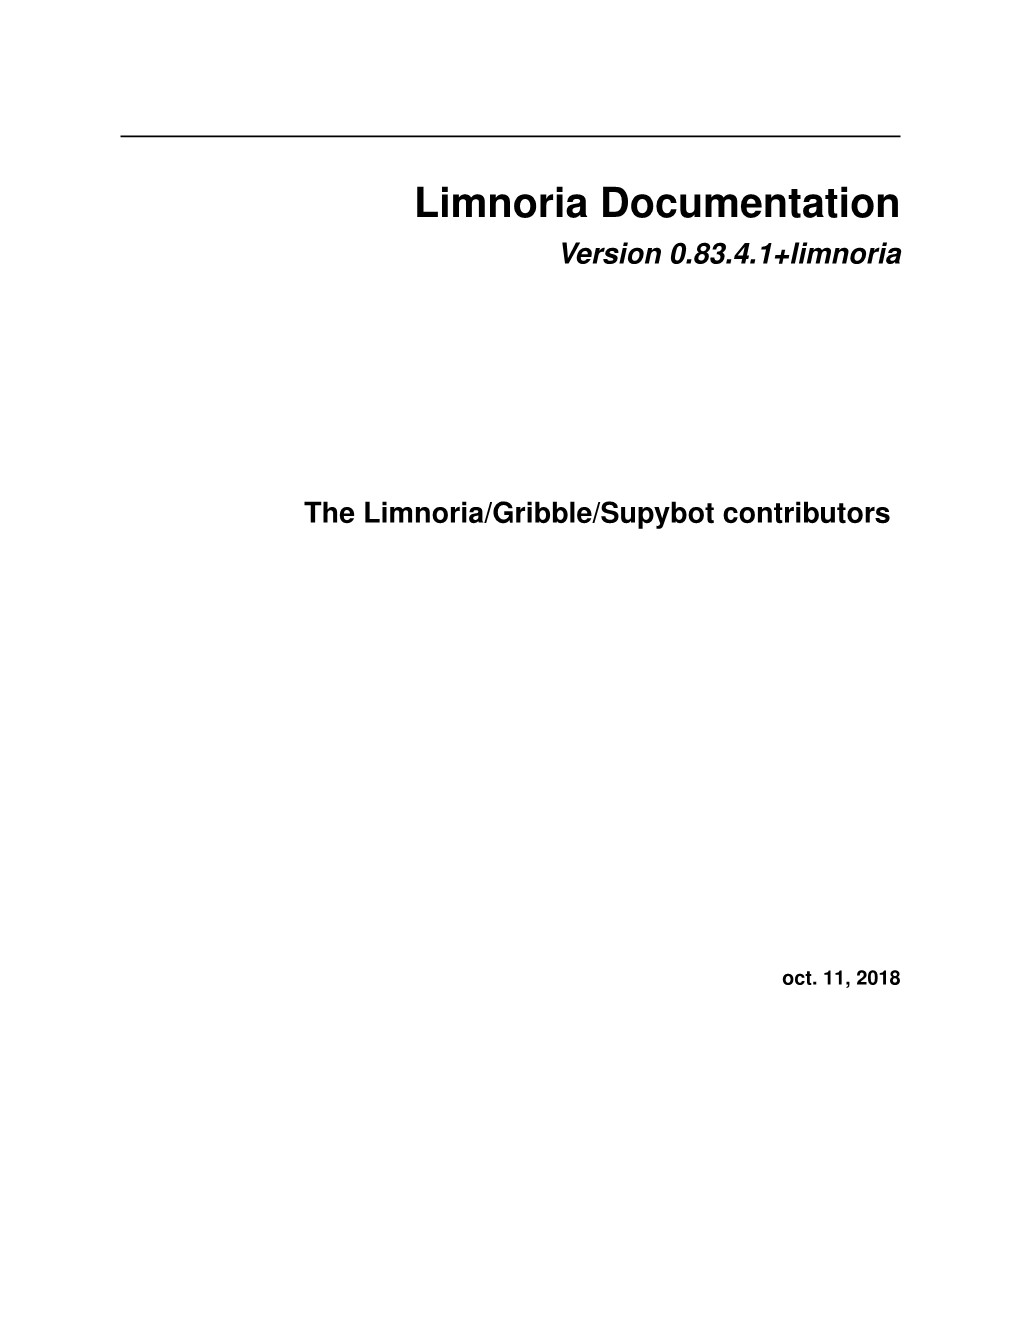 Limnoria Documentation Version 0.83.4.1+Limnoria